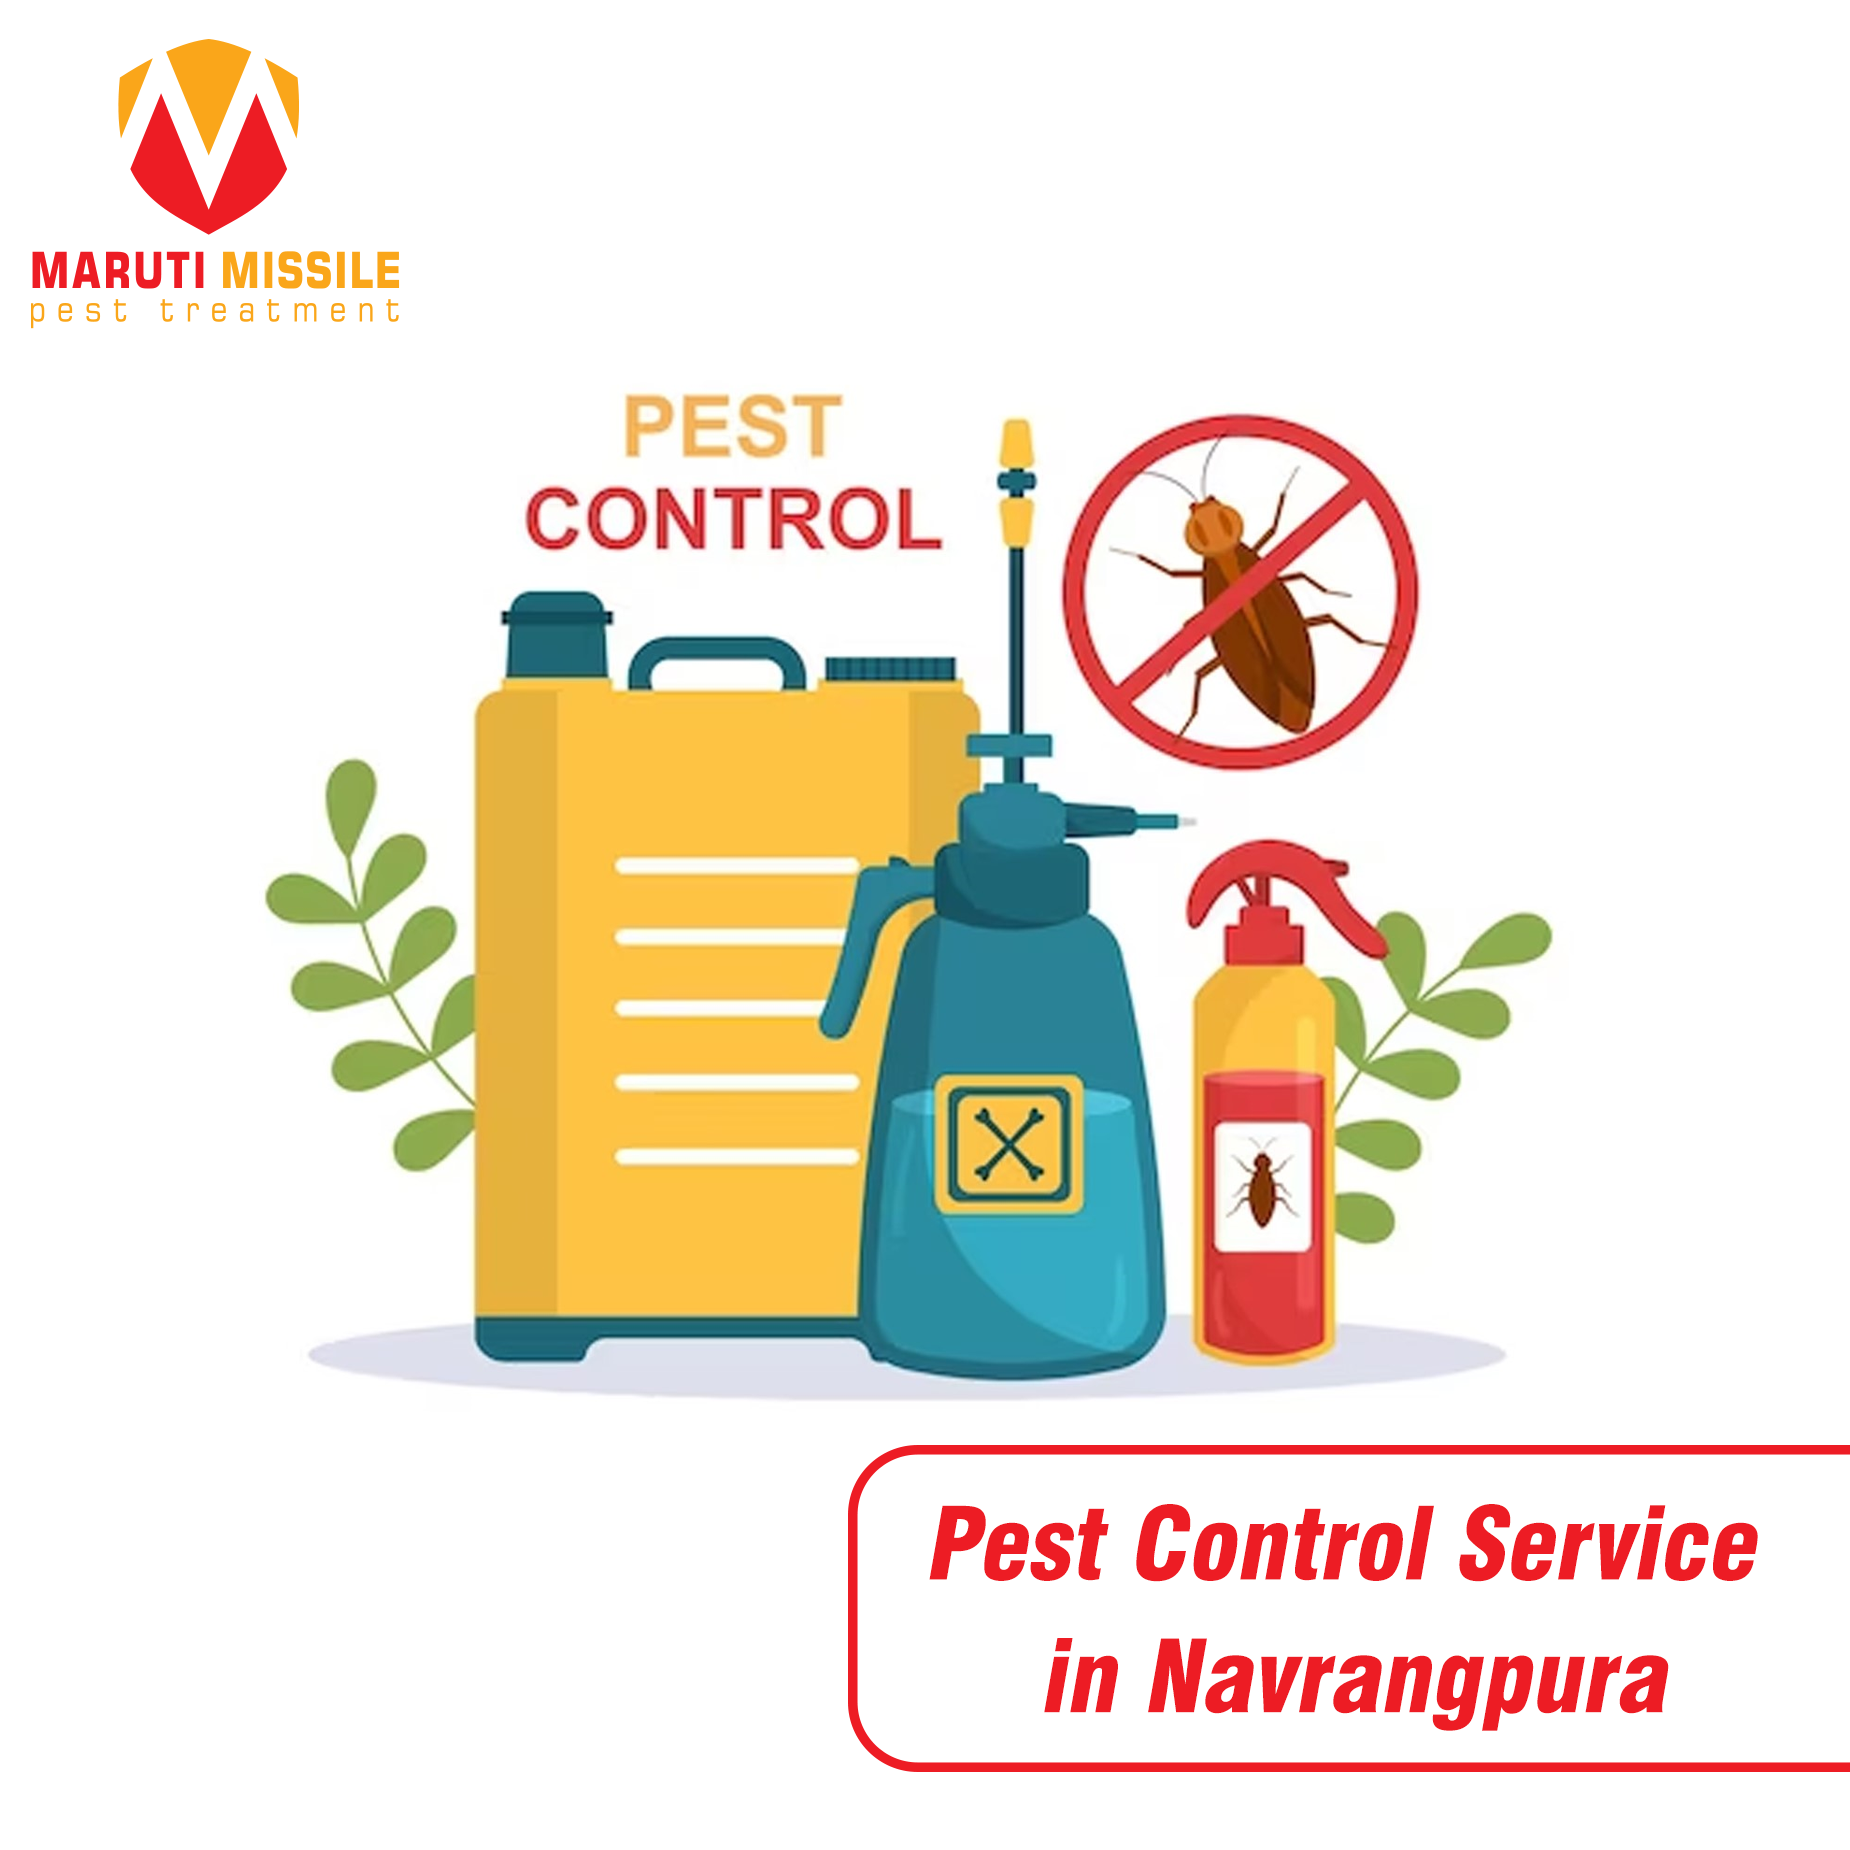 Pest Control Service in Navrangpura